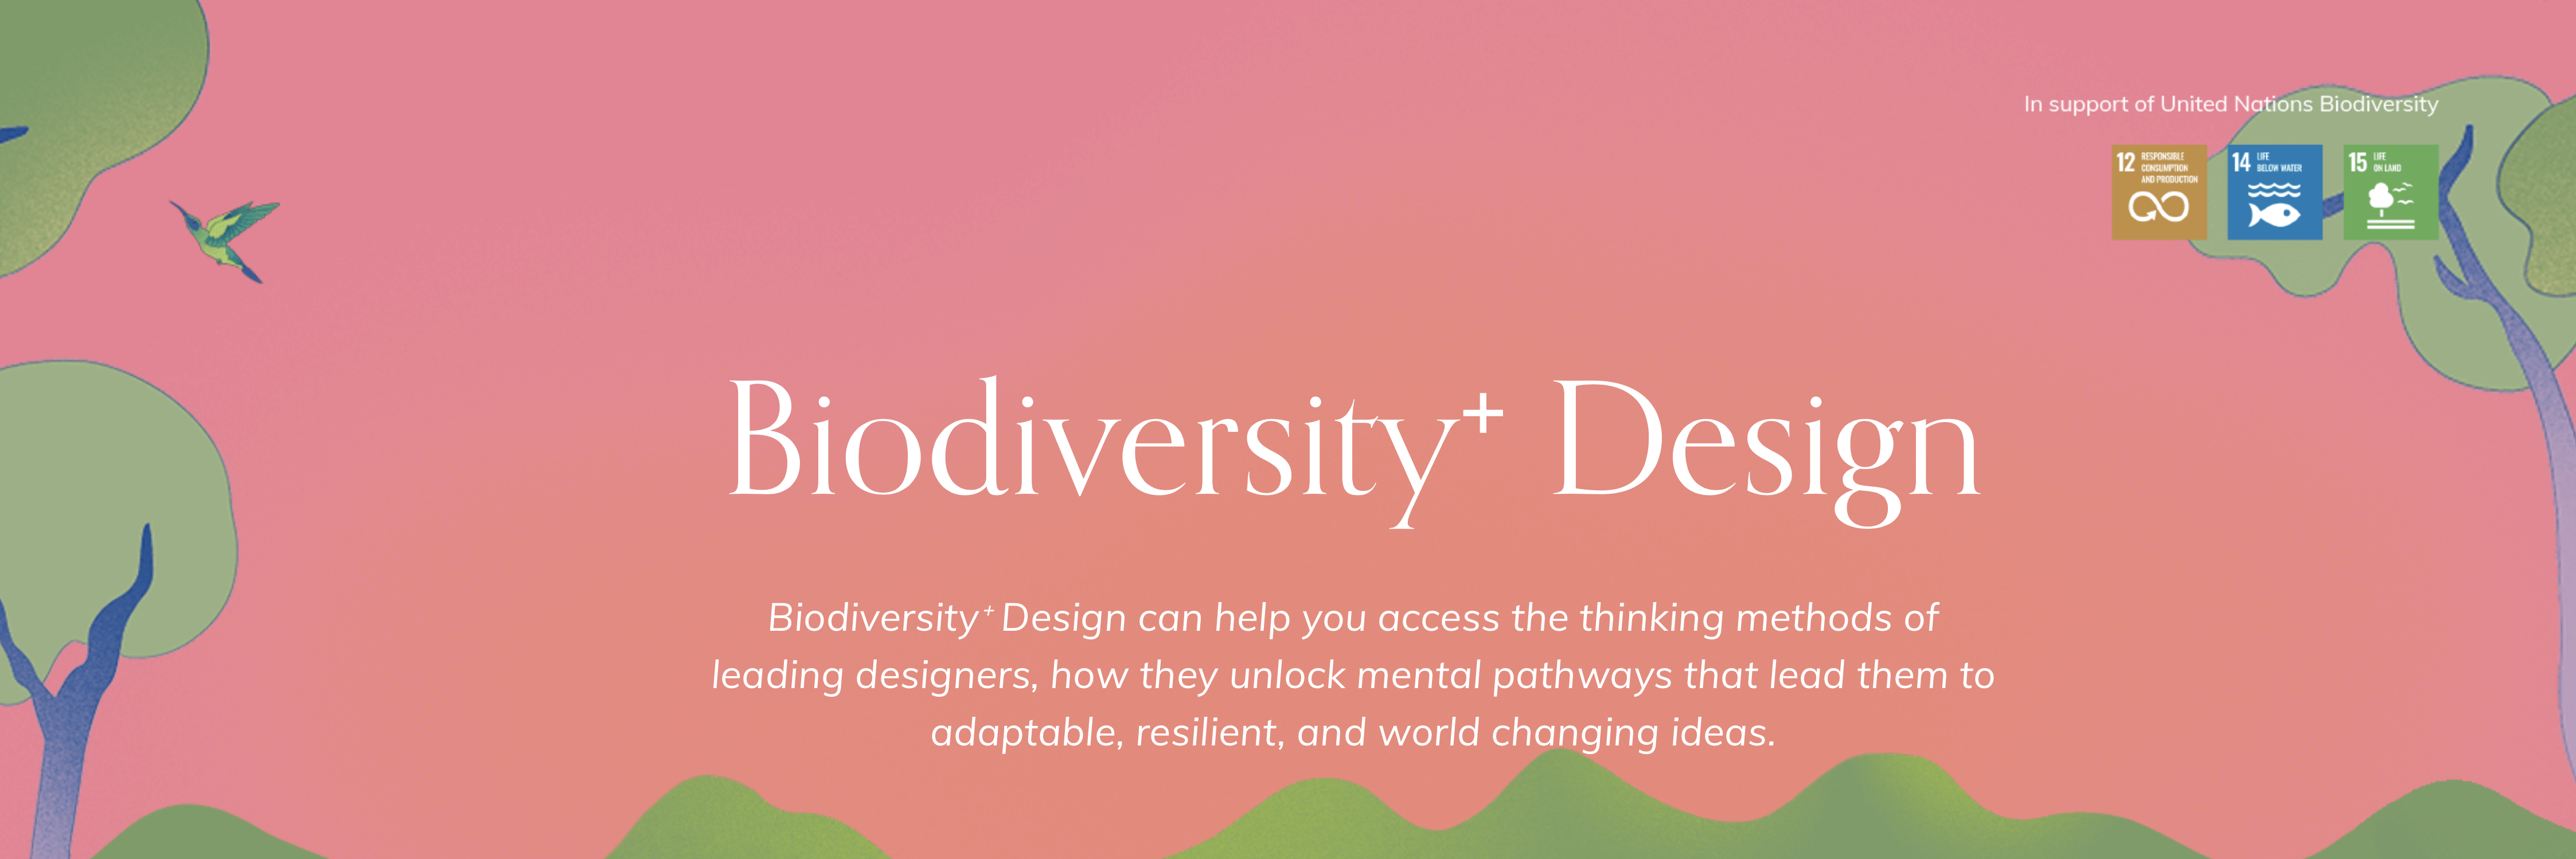 TEALEAVES BiodiversityDesign Project Logo